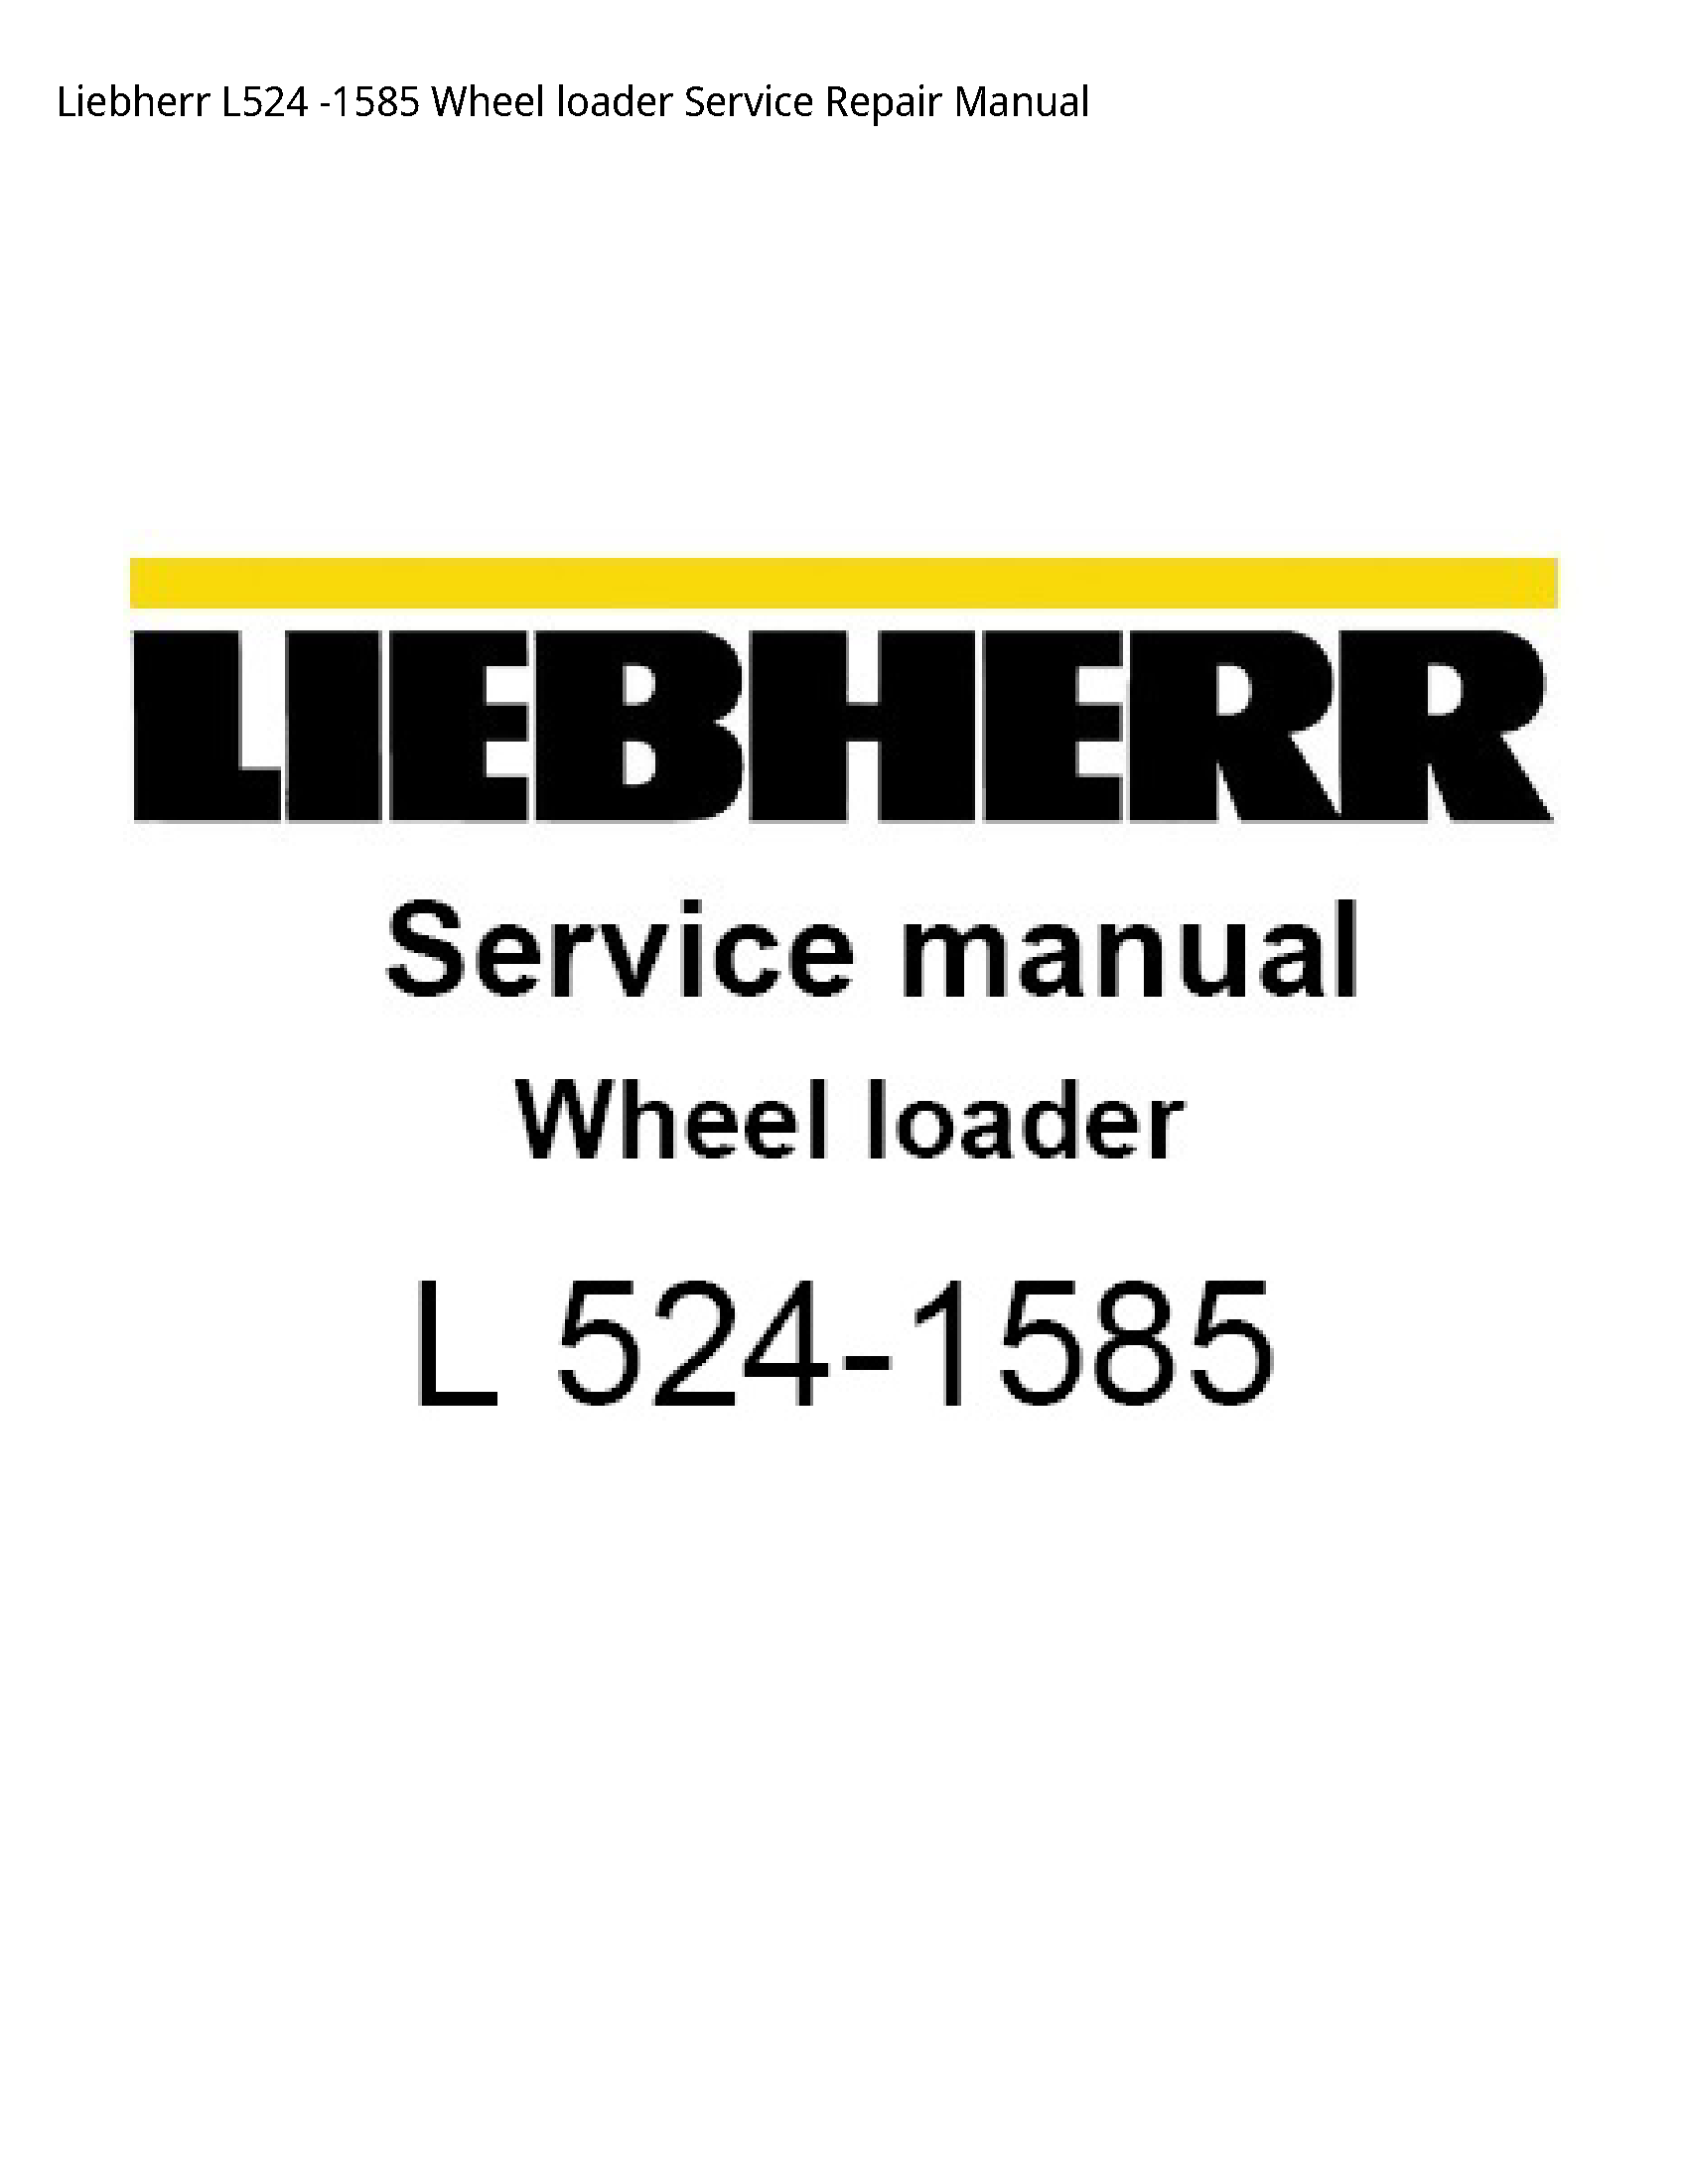 Liebherr L524 Wheel loader manual